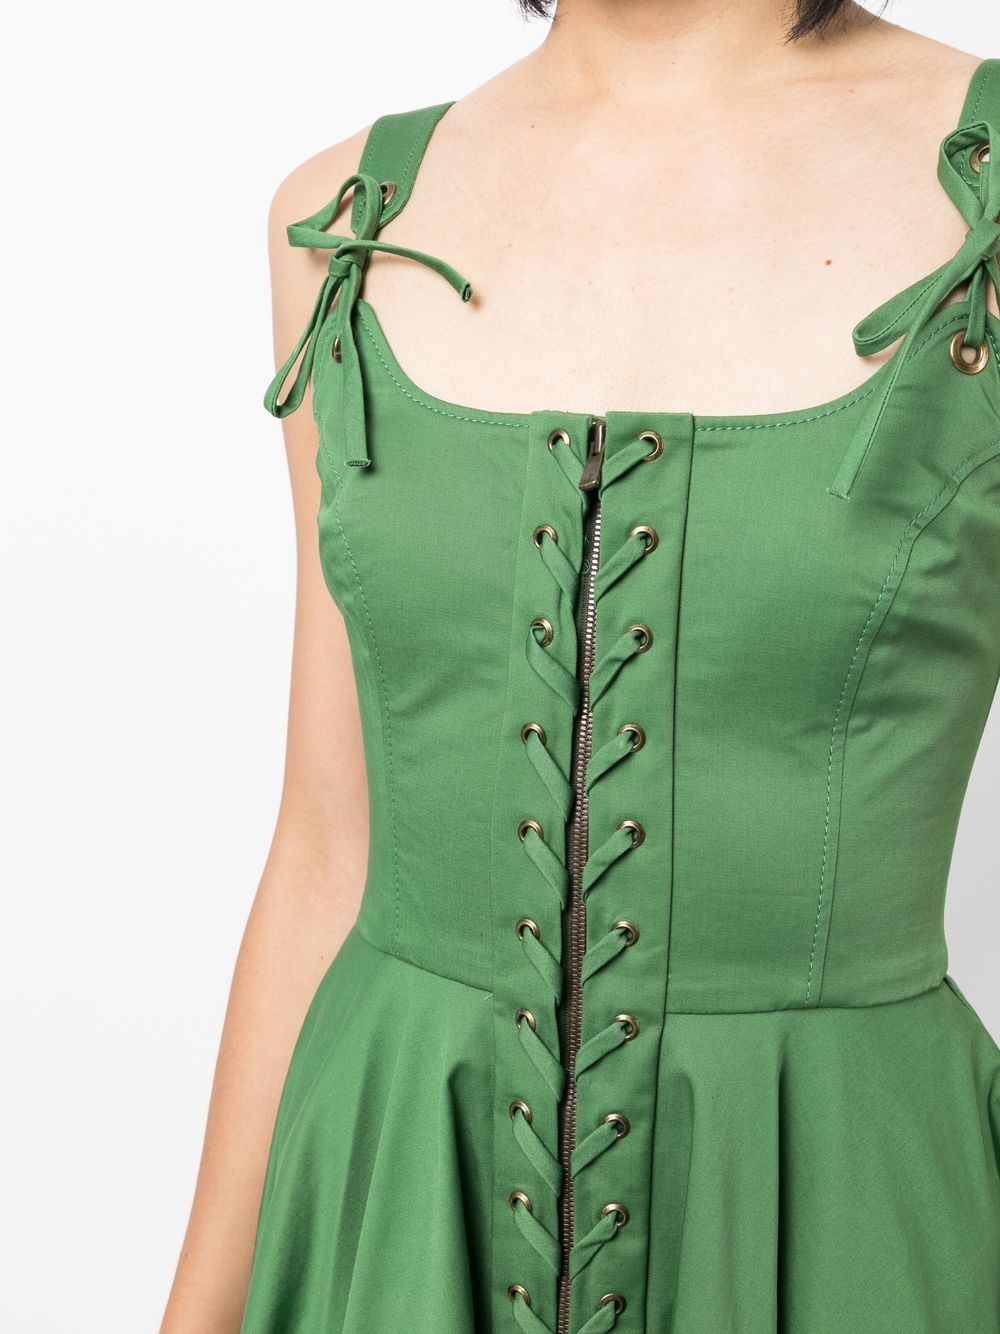 Monse-Laced-Front-Sleeveless-Dress-Green-5